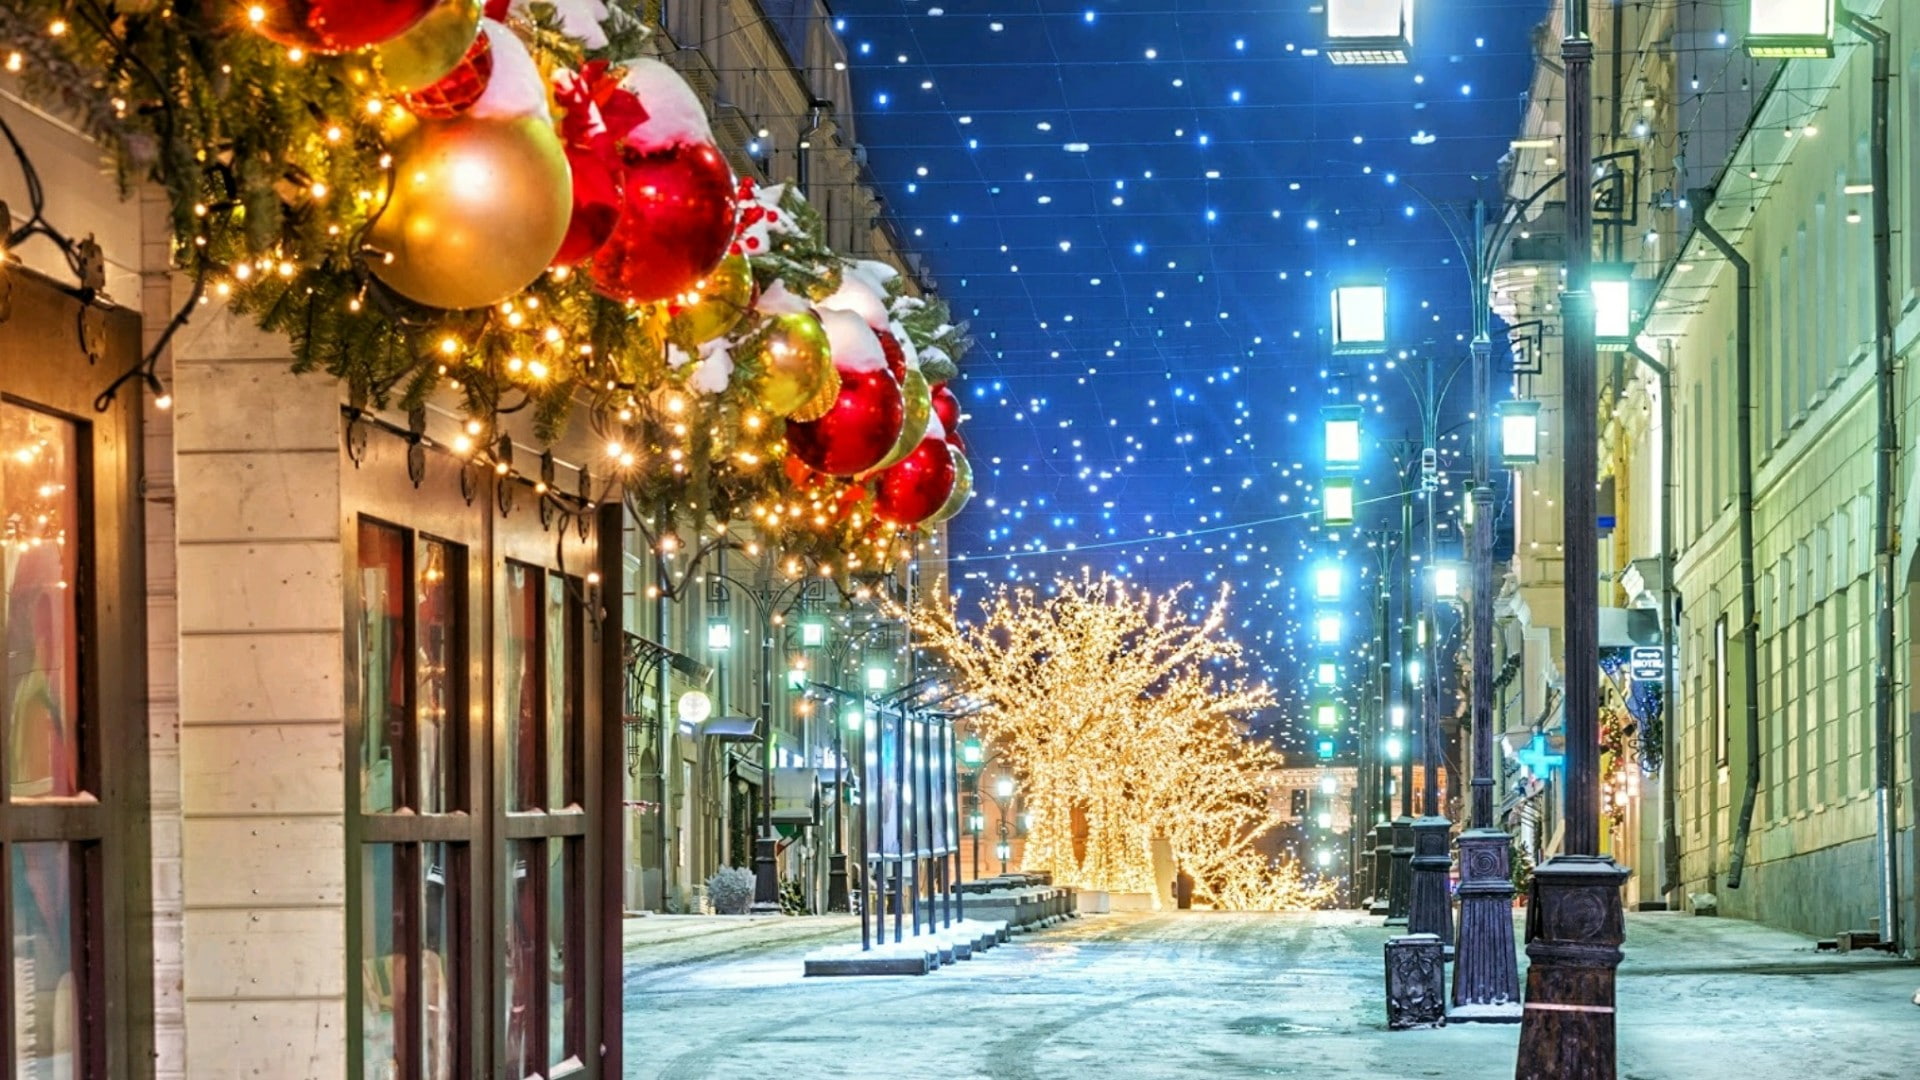 NYC Christmas Decorations, night, window, snow, russia